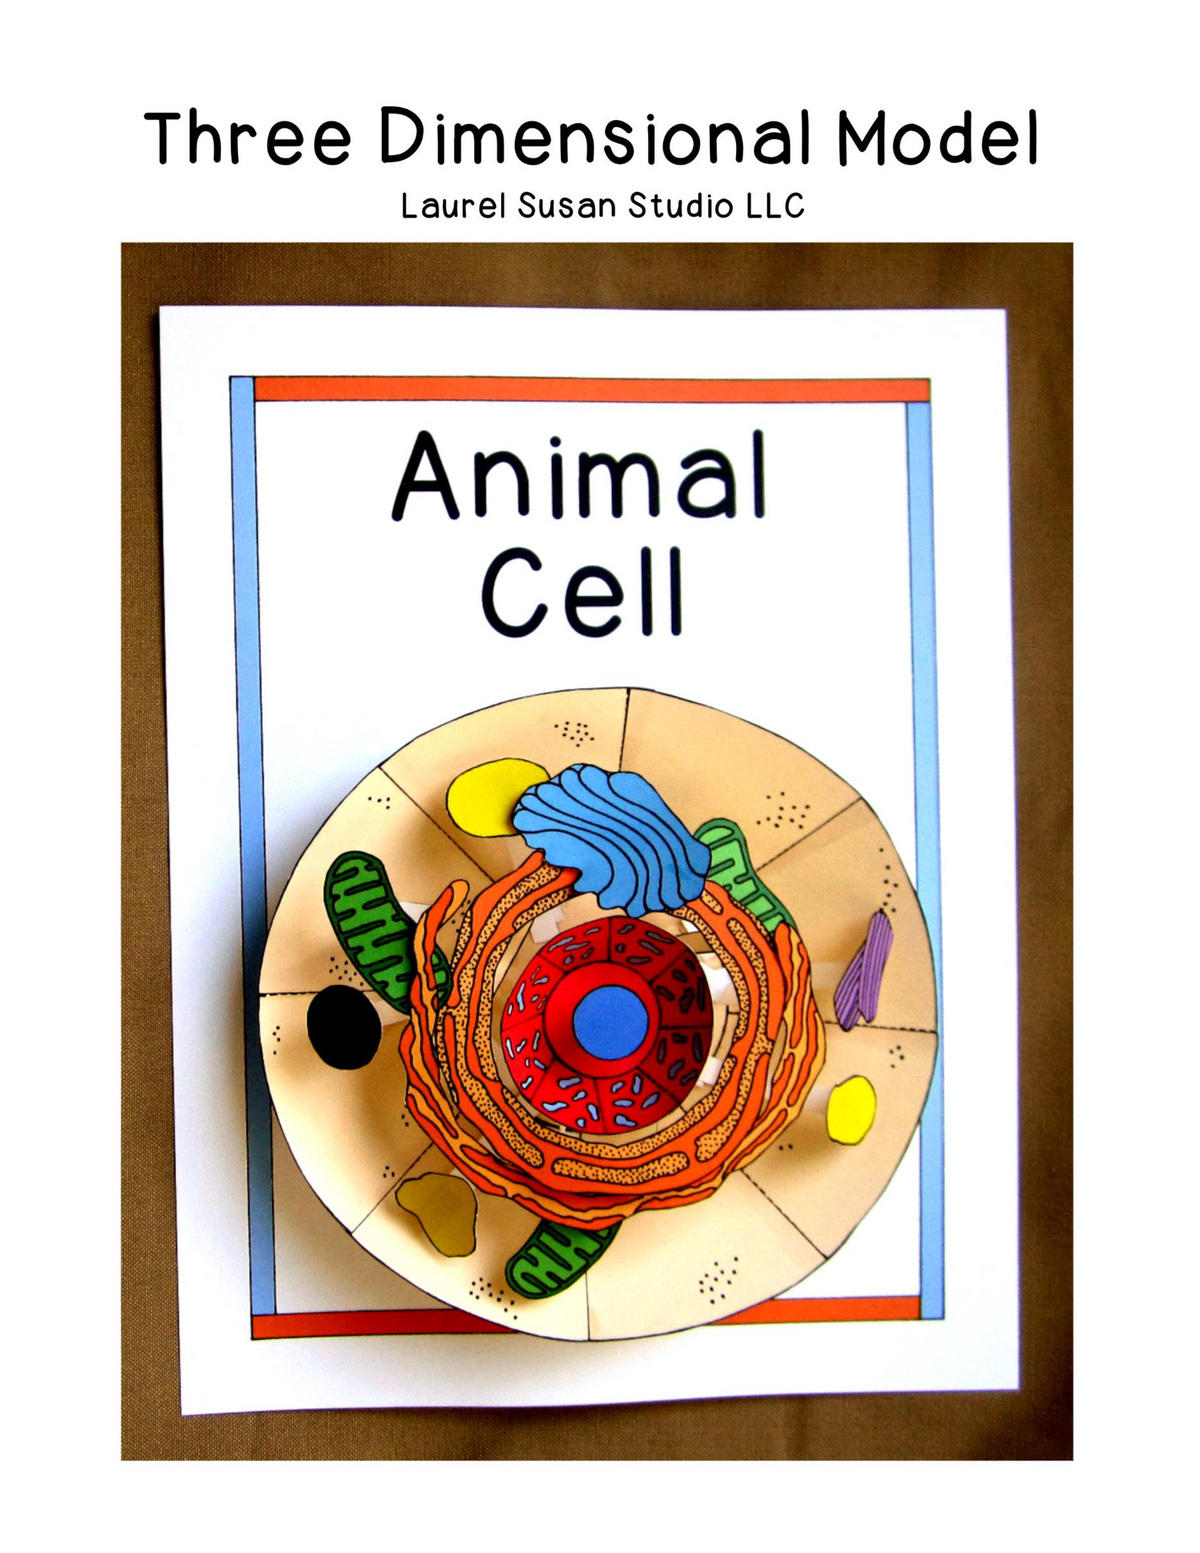 Animal Cell Model Template - Animal Cell Model – Three Dimensional Laurel  Susan Studio LLC This - Studocu